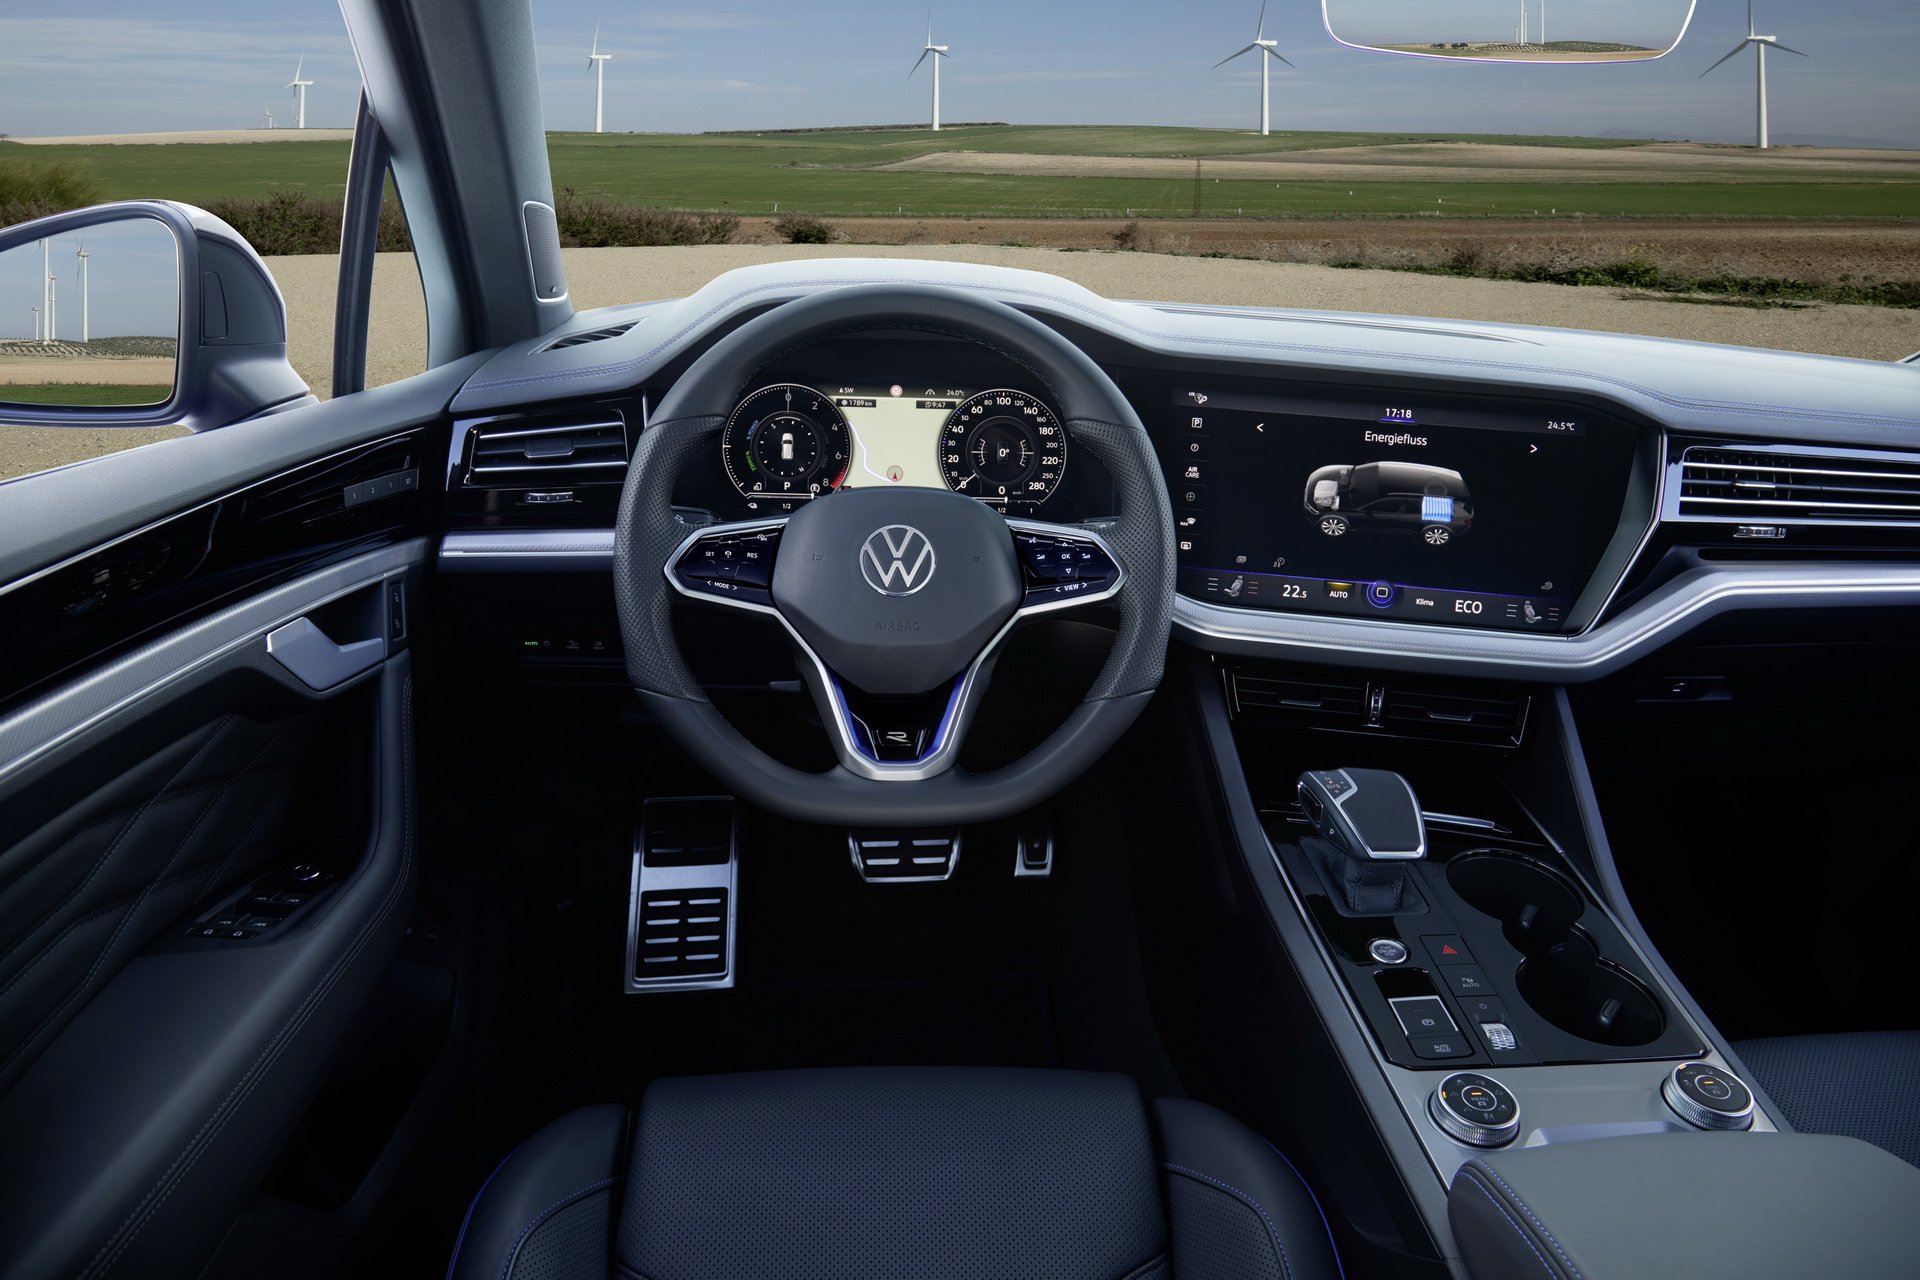 Foto interni nuova Volkswagen Touareg R Ibrida 2020